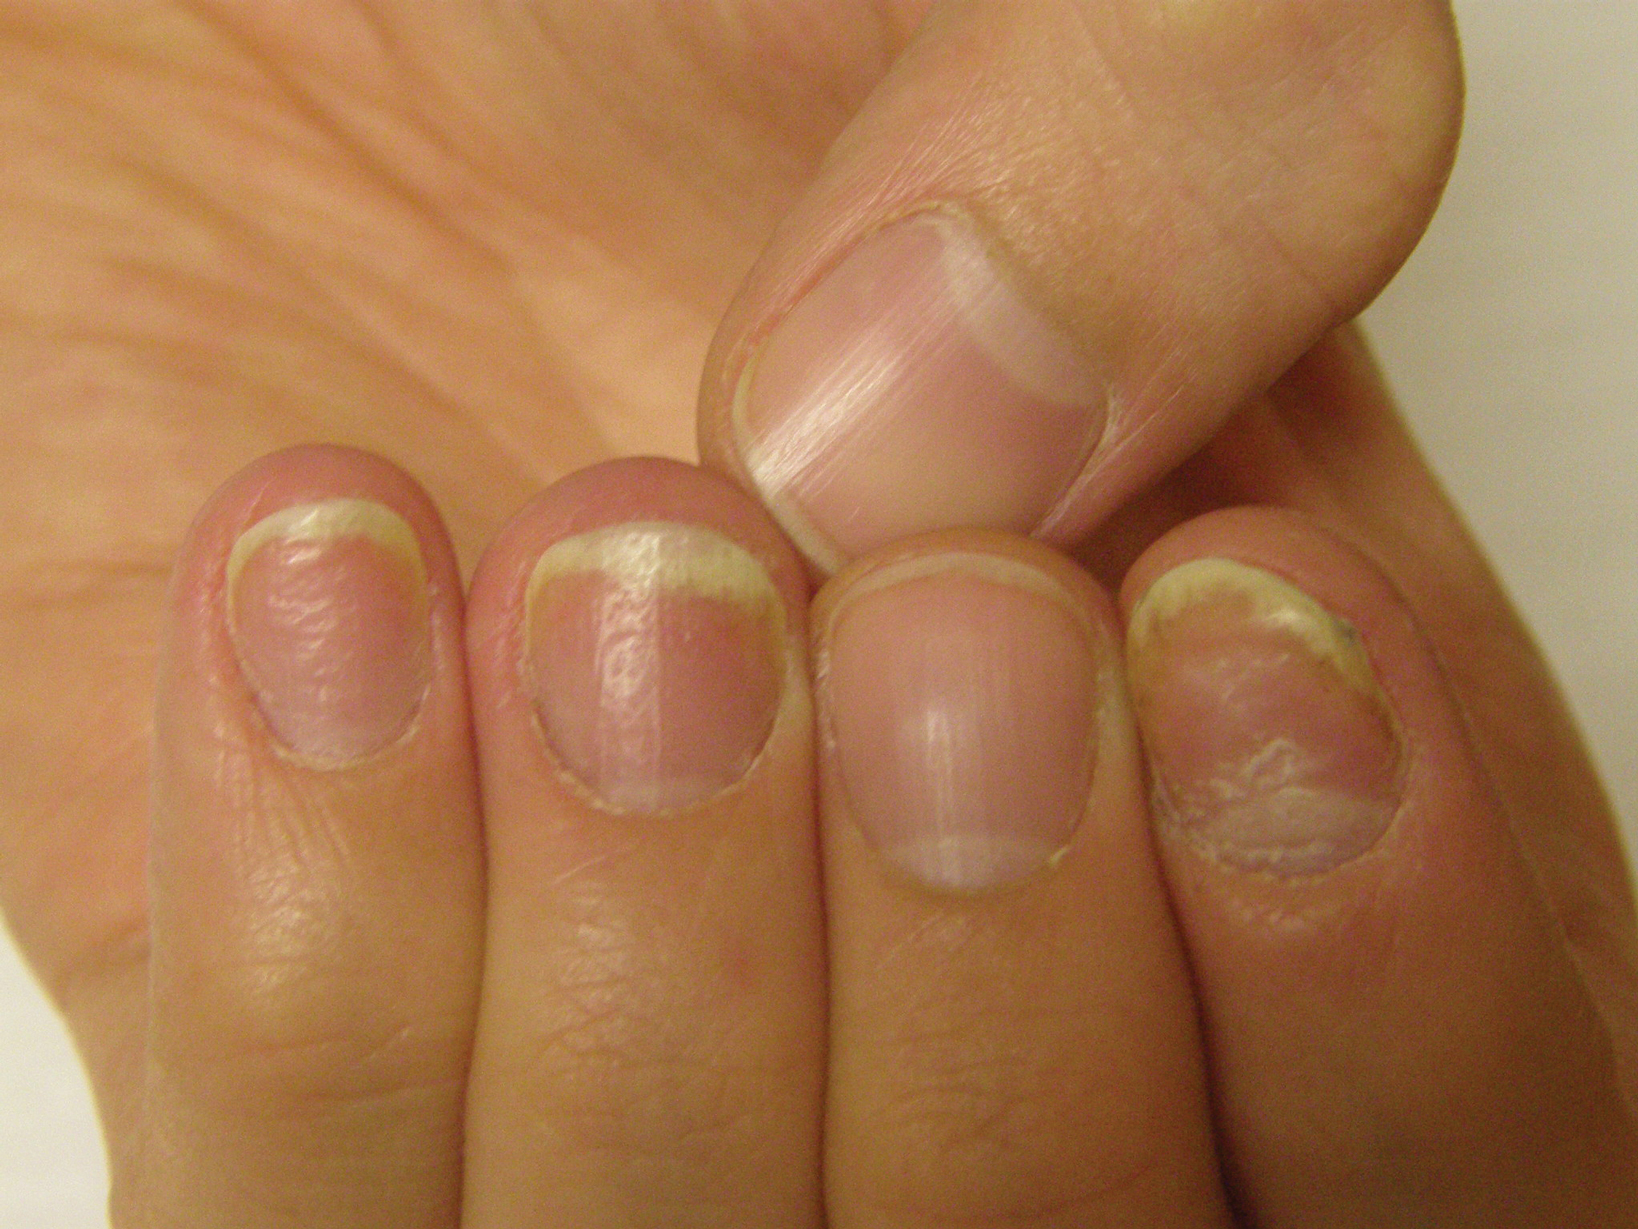 nail psoriasis signs and symptoms)